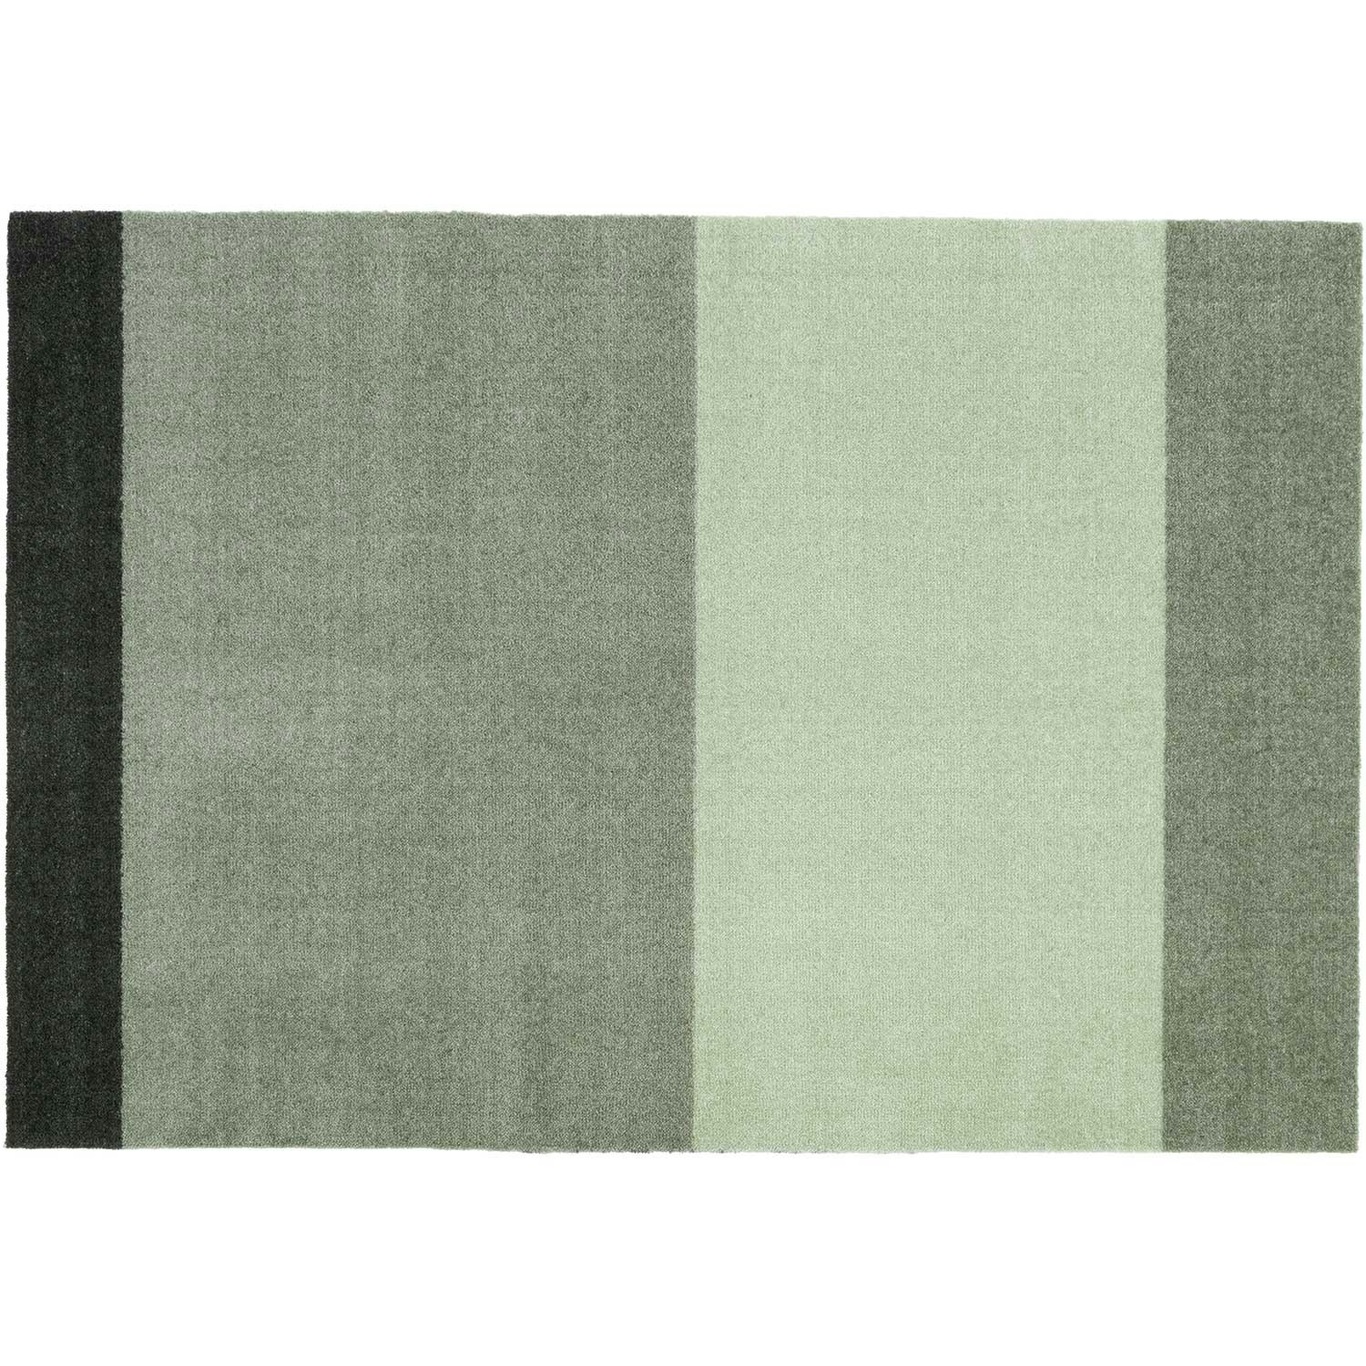 Stripes Rug Light Green / Dark Green, 90x130 cm